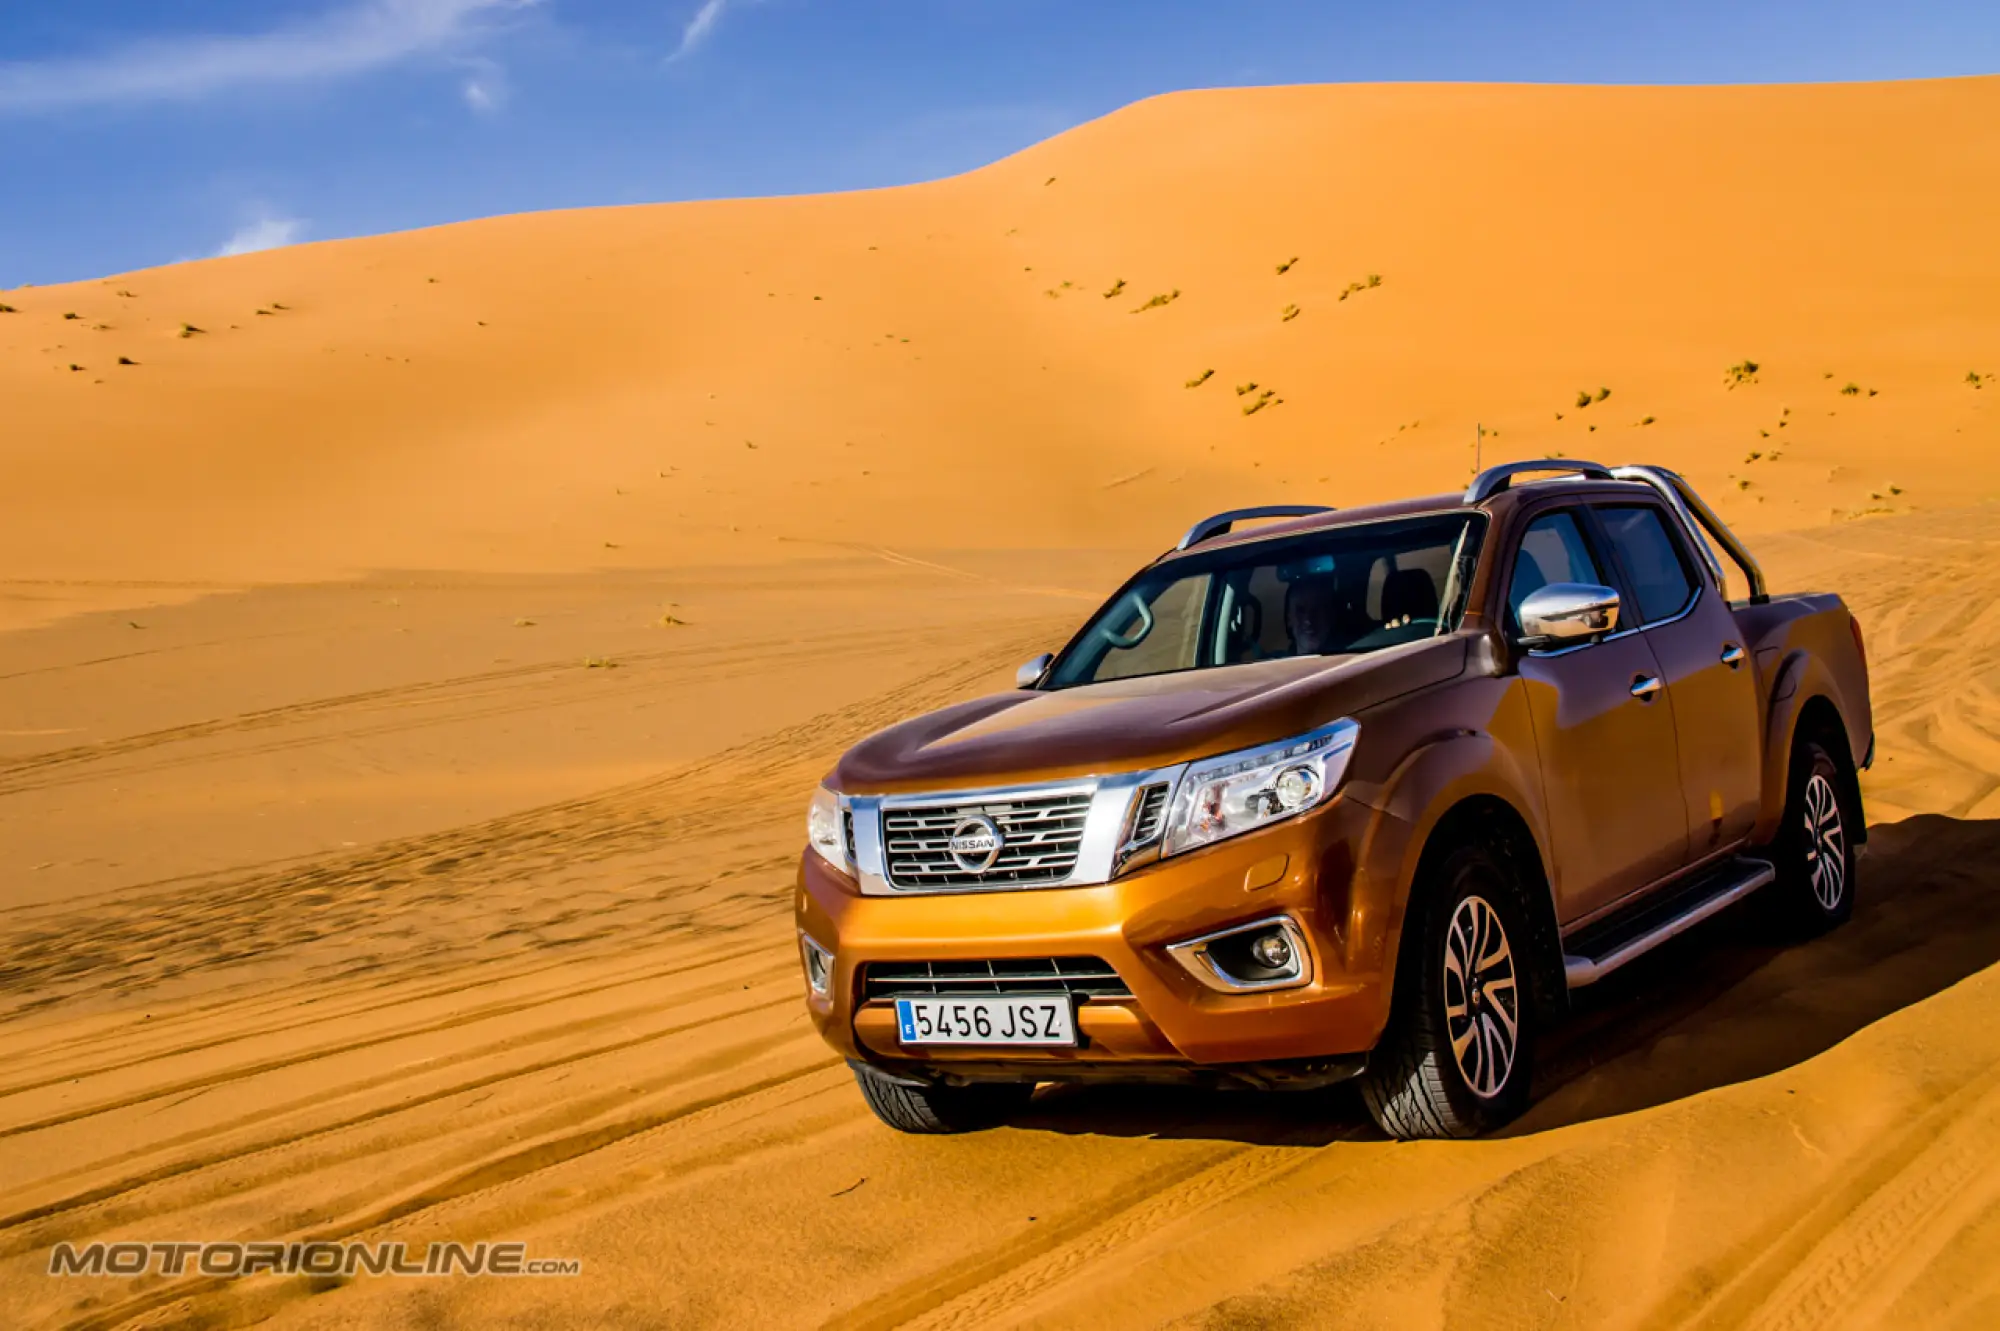 Nissan Navara MY 2016 - Sfida alle Dune del Sahara - 26